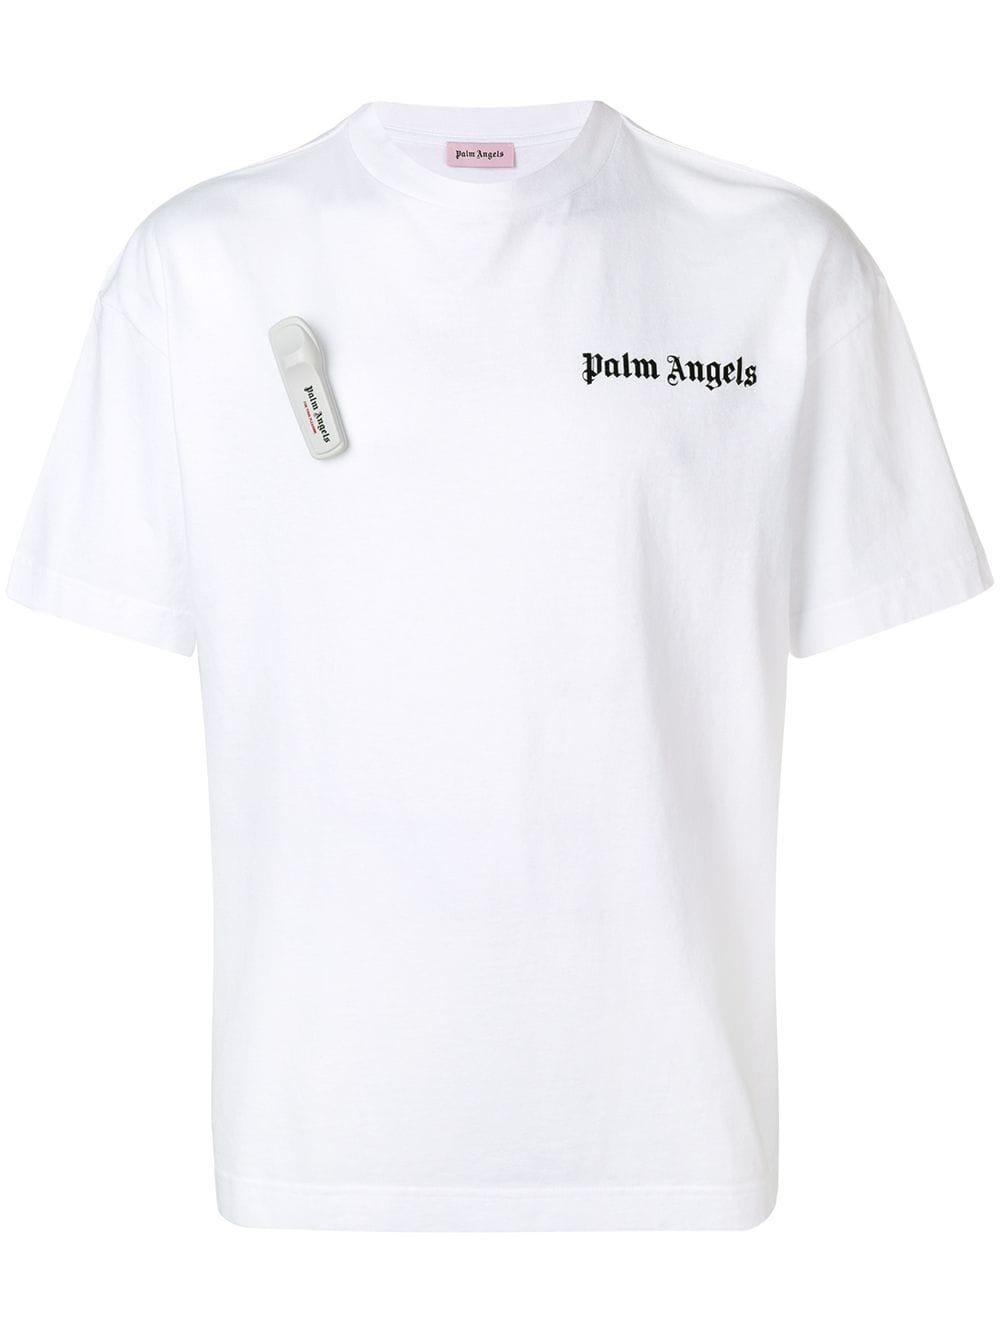 palm angels t shirt tag